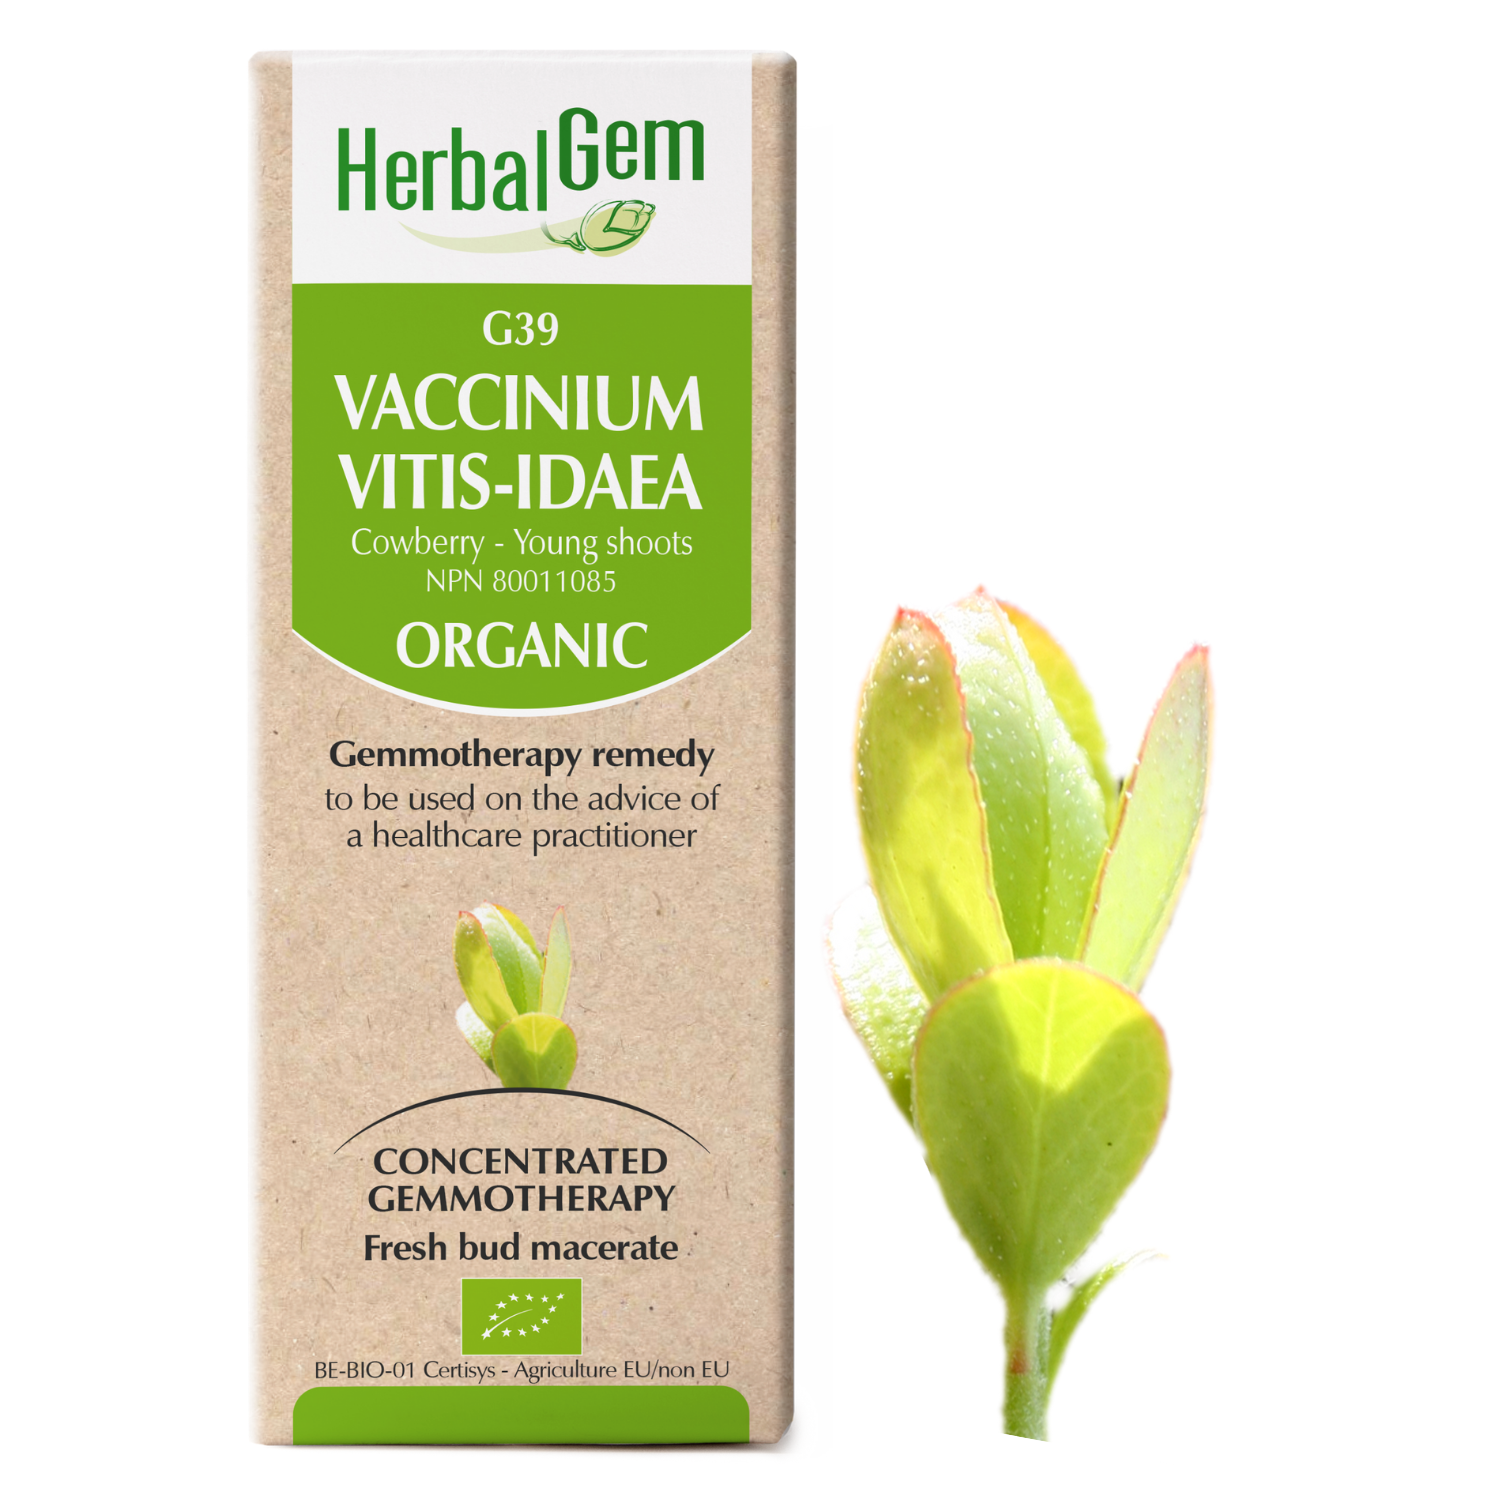 G39 Vaccinium vitis-idaea (Cowberry)  Gemmotherapy remedy Organic